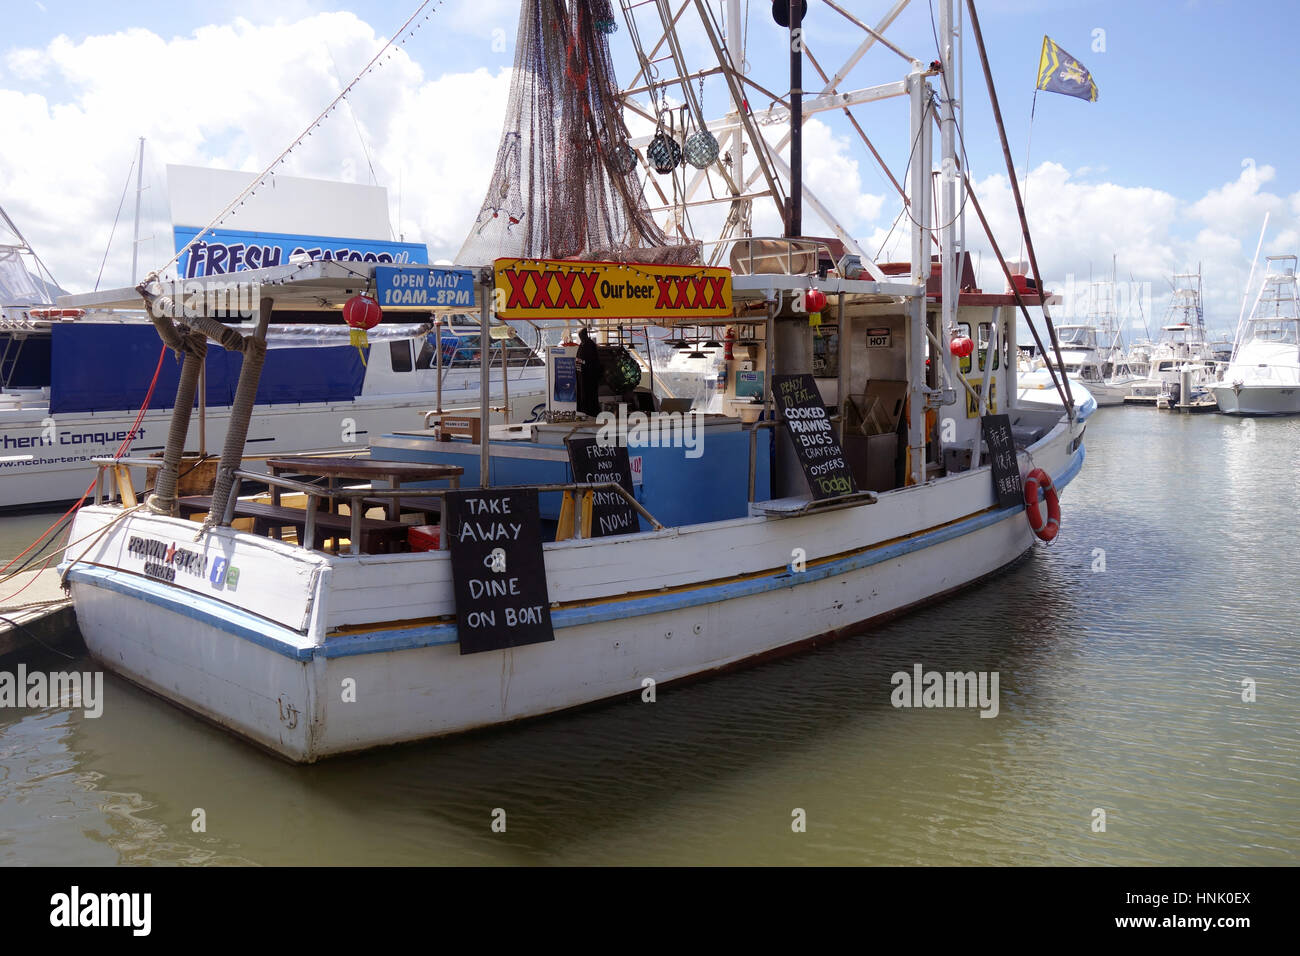 Prawn Star, a trawler boat restaurant offering fresh seafood, Cairns marina, Queensland, Australia. No PR Stock Photo